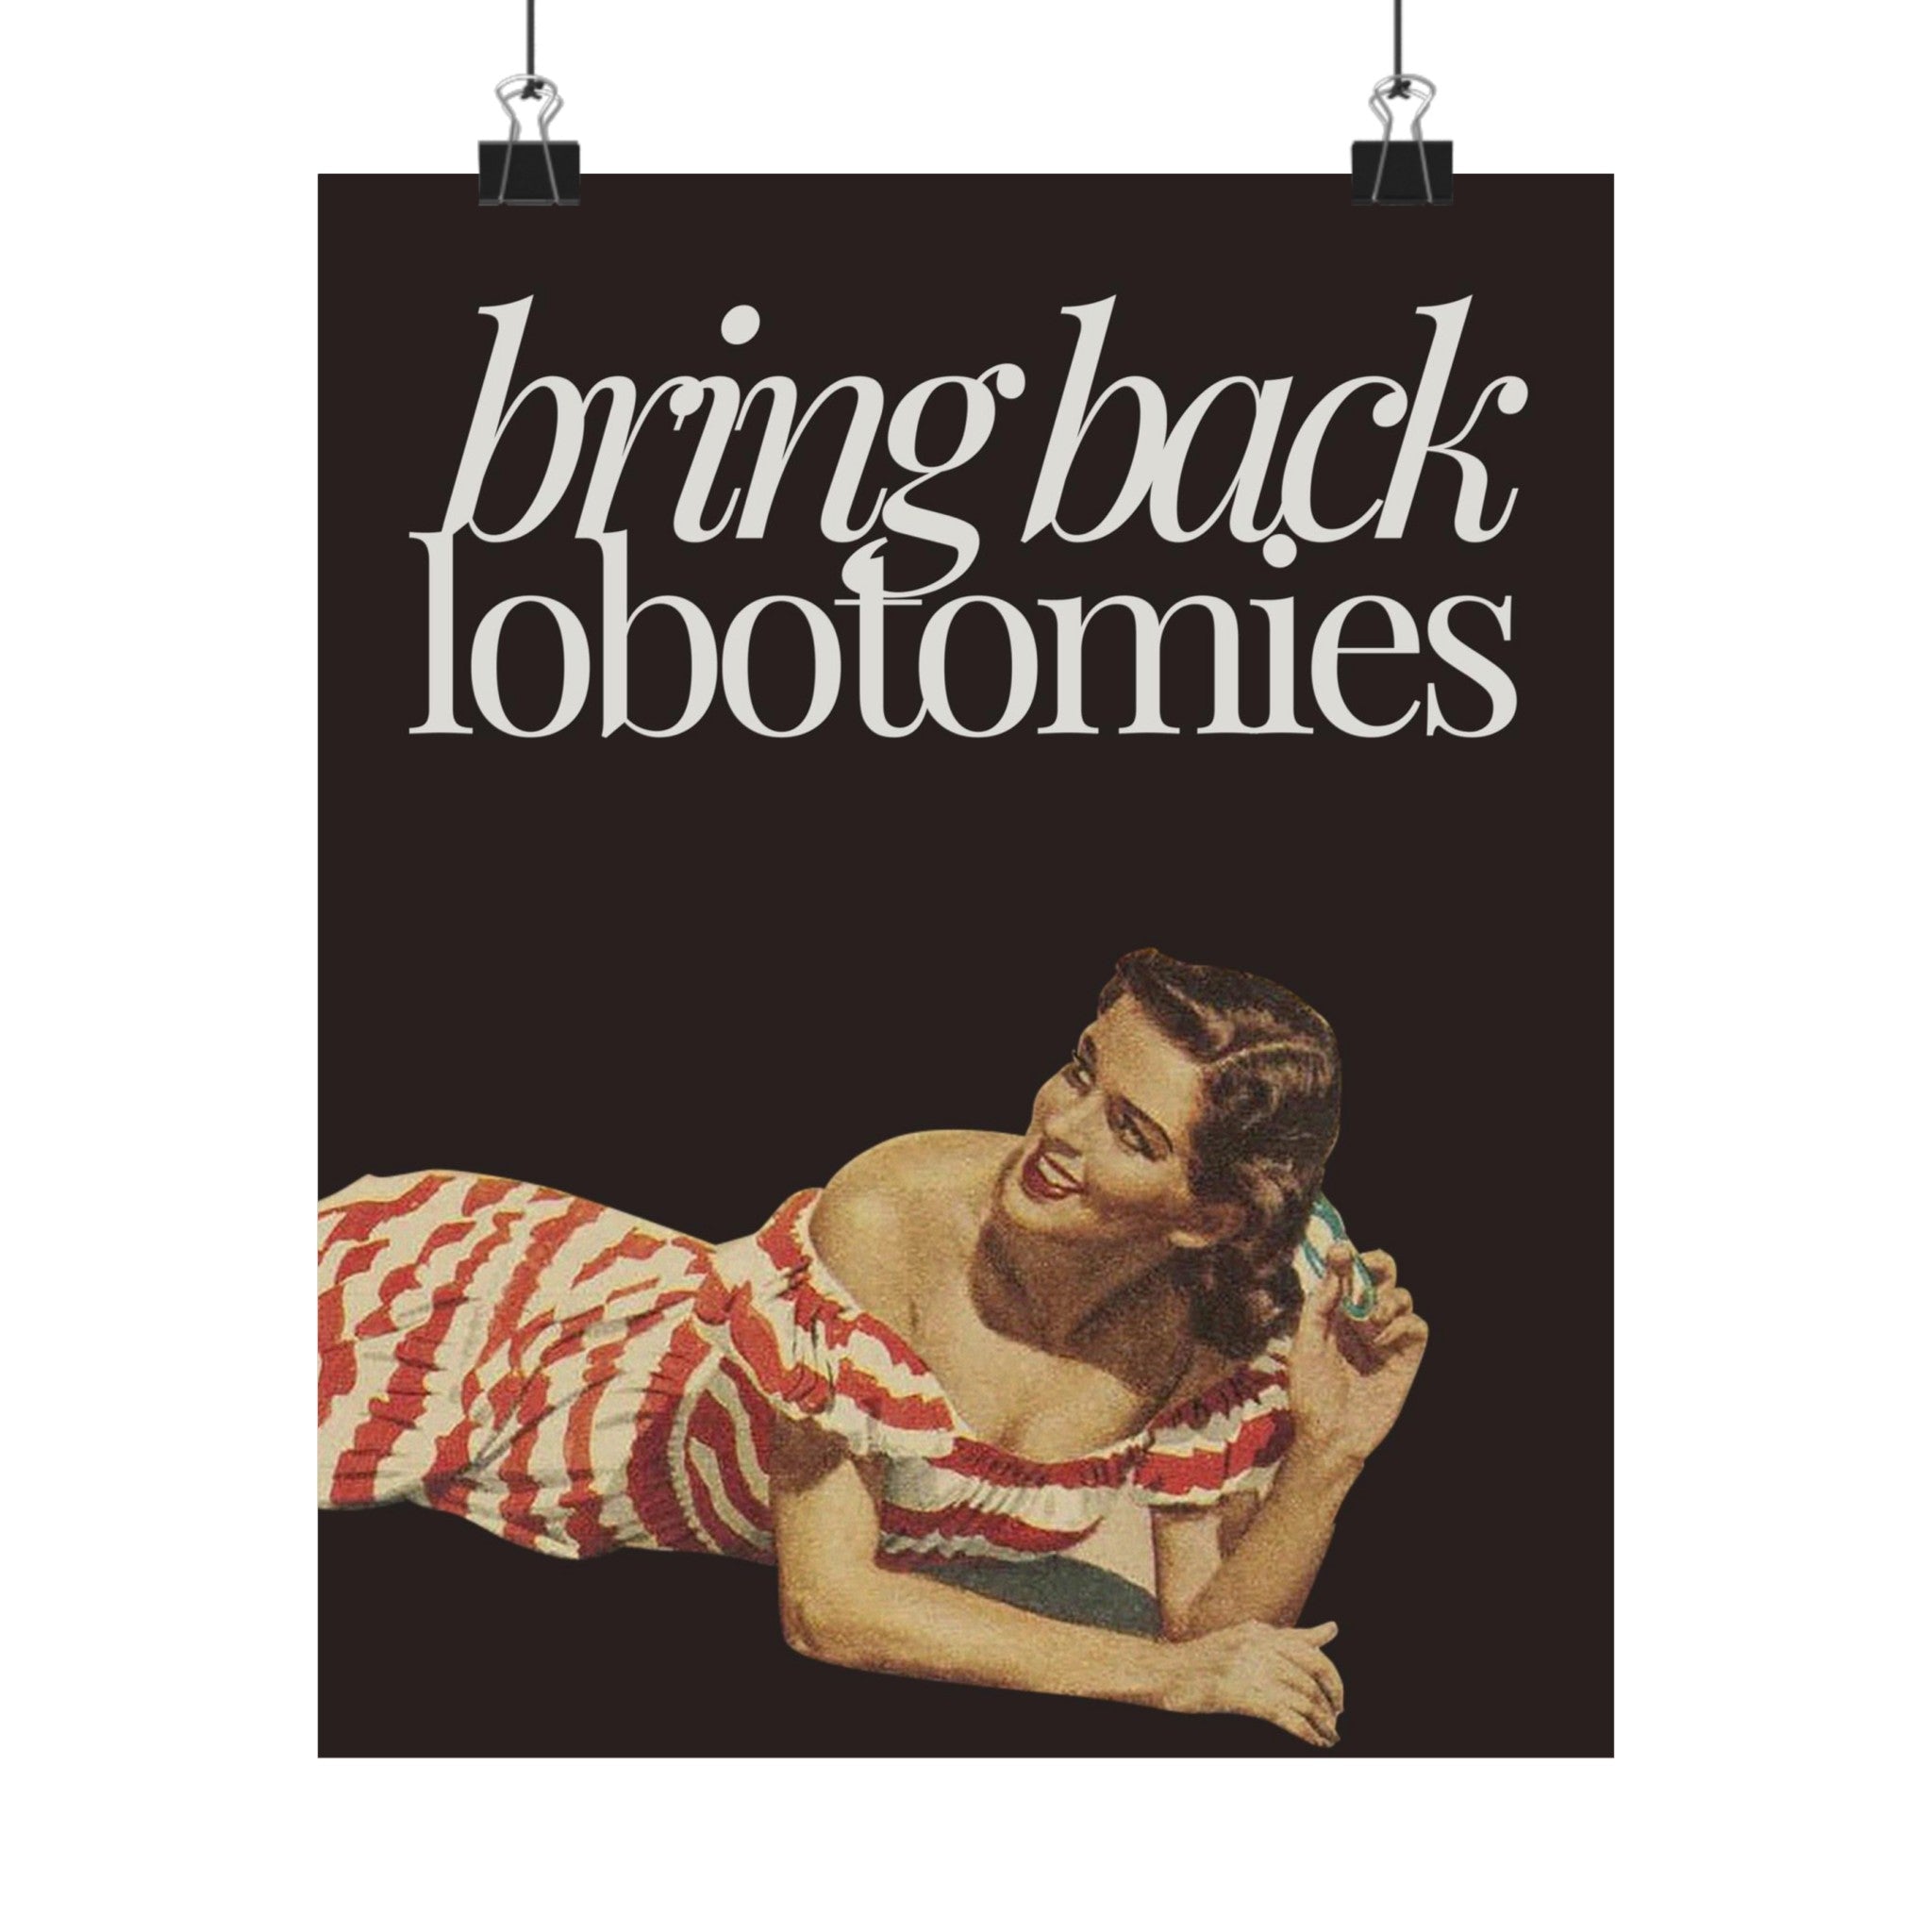 Bring Back Lobotomies Physical Poster